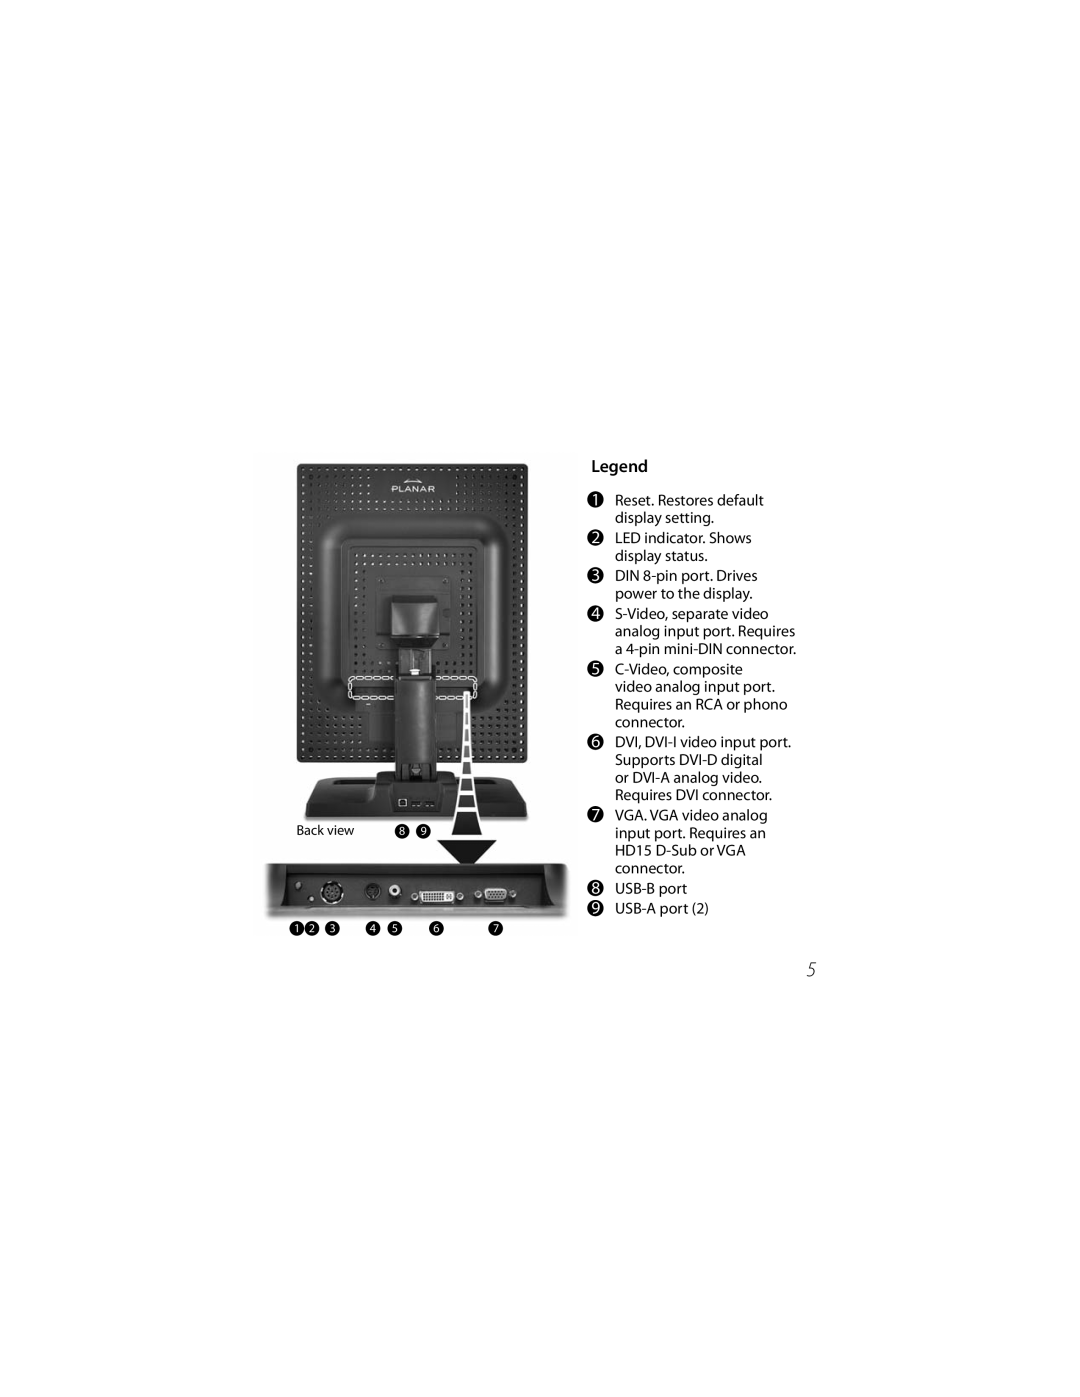 Planar Dome E2c manual USB-B port 9 USB-A port, Back view 